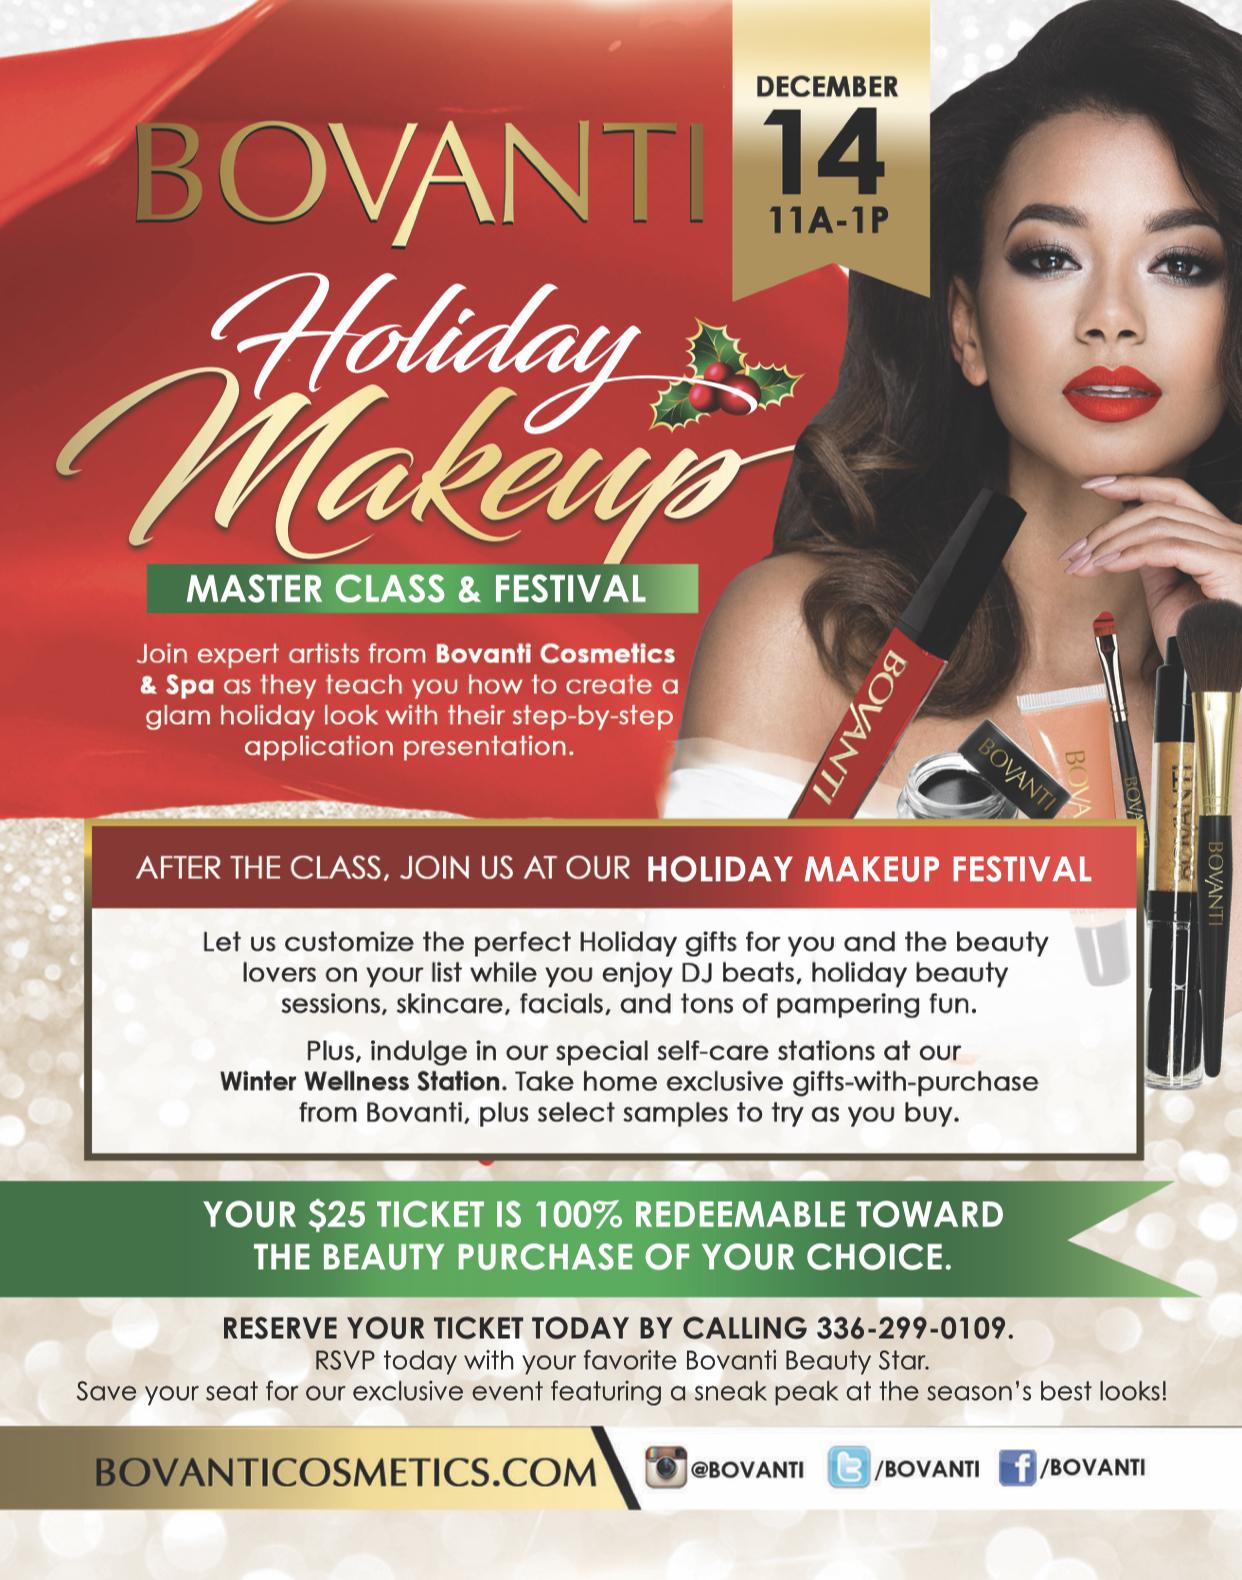 Bovanti Holiday Makeup Master Class & Festival